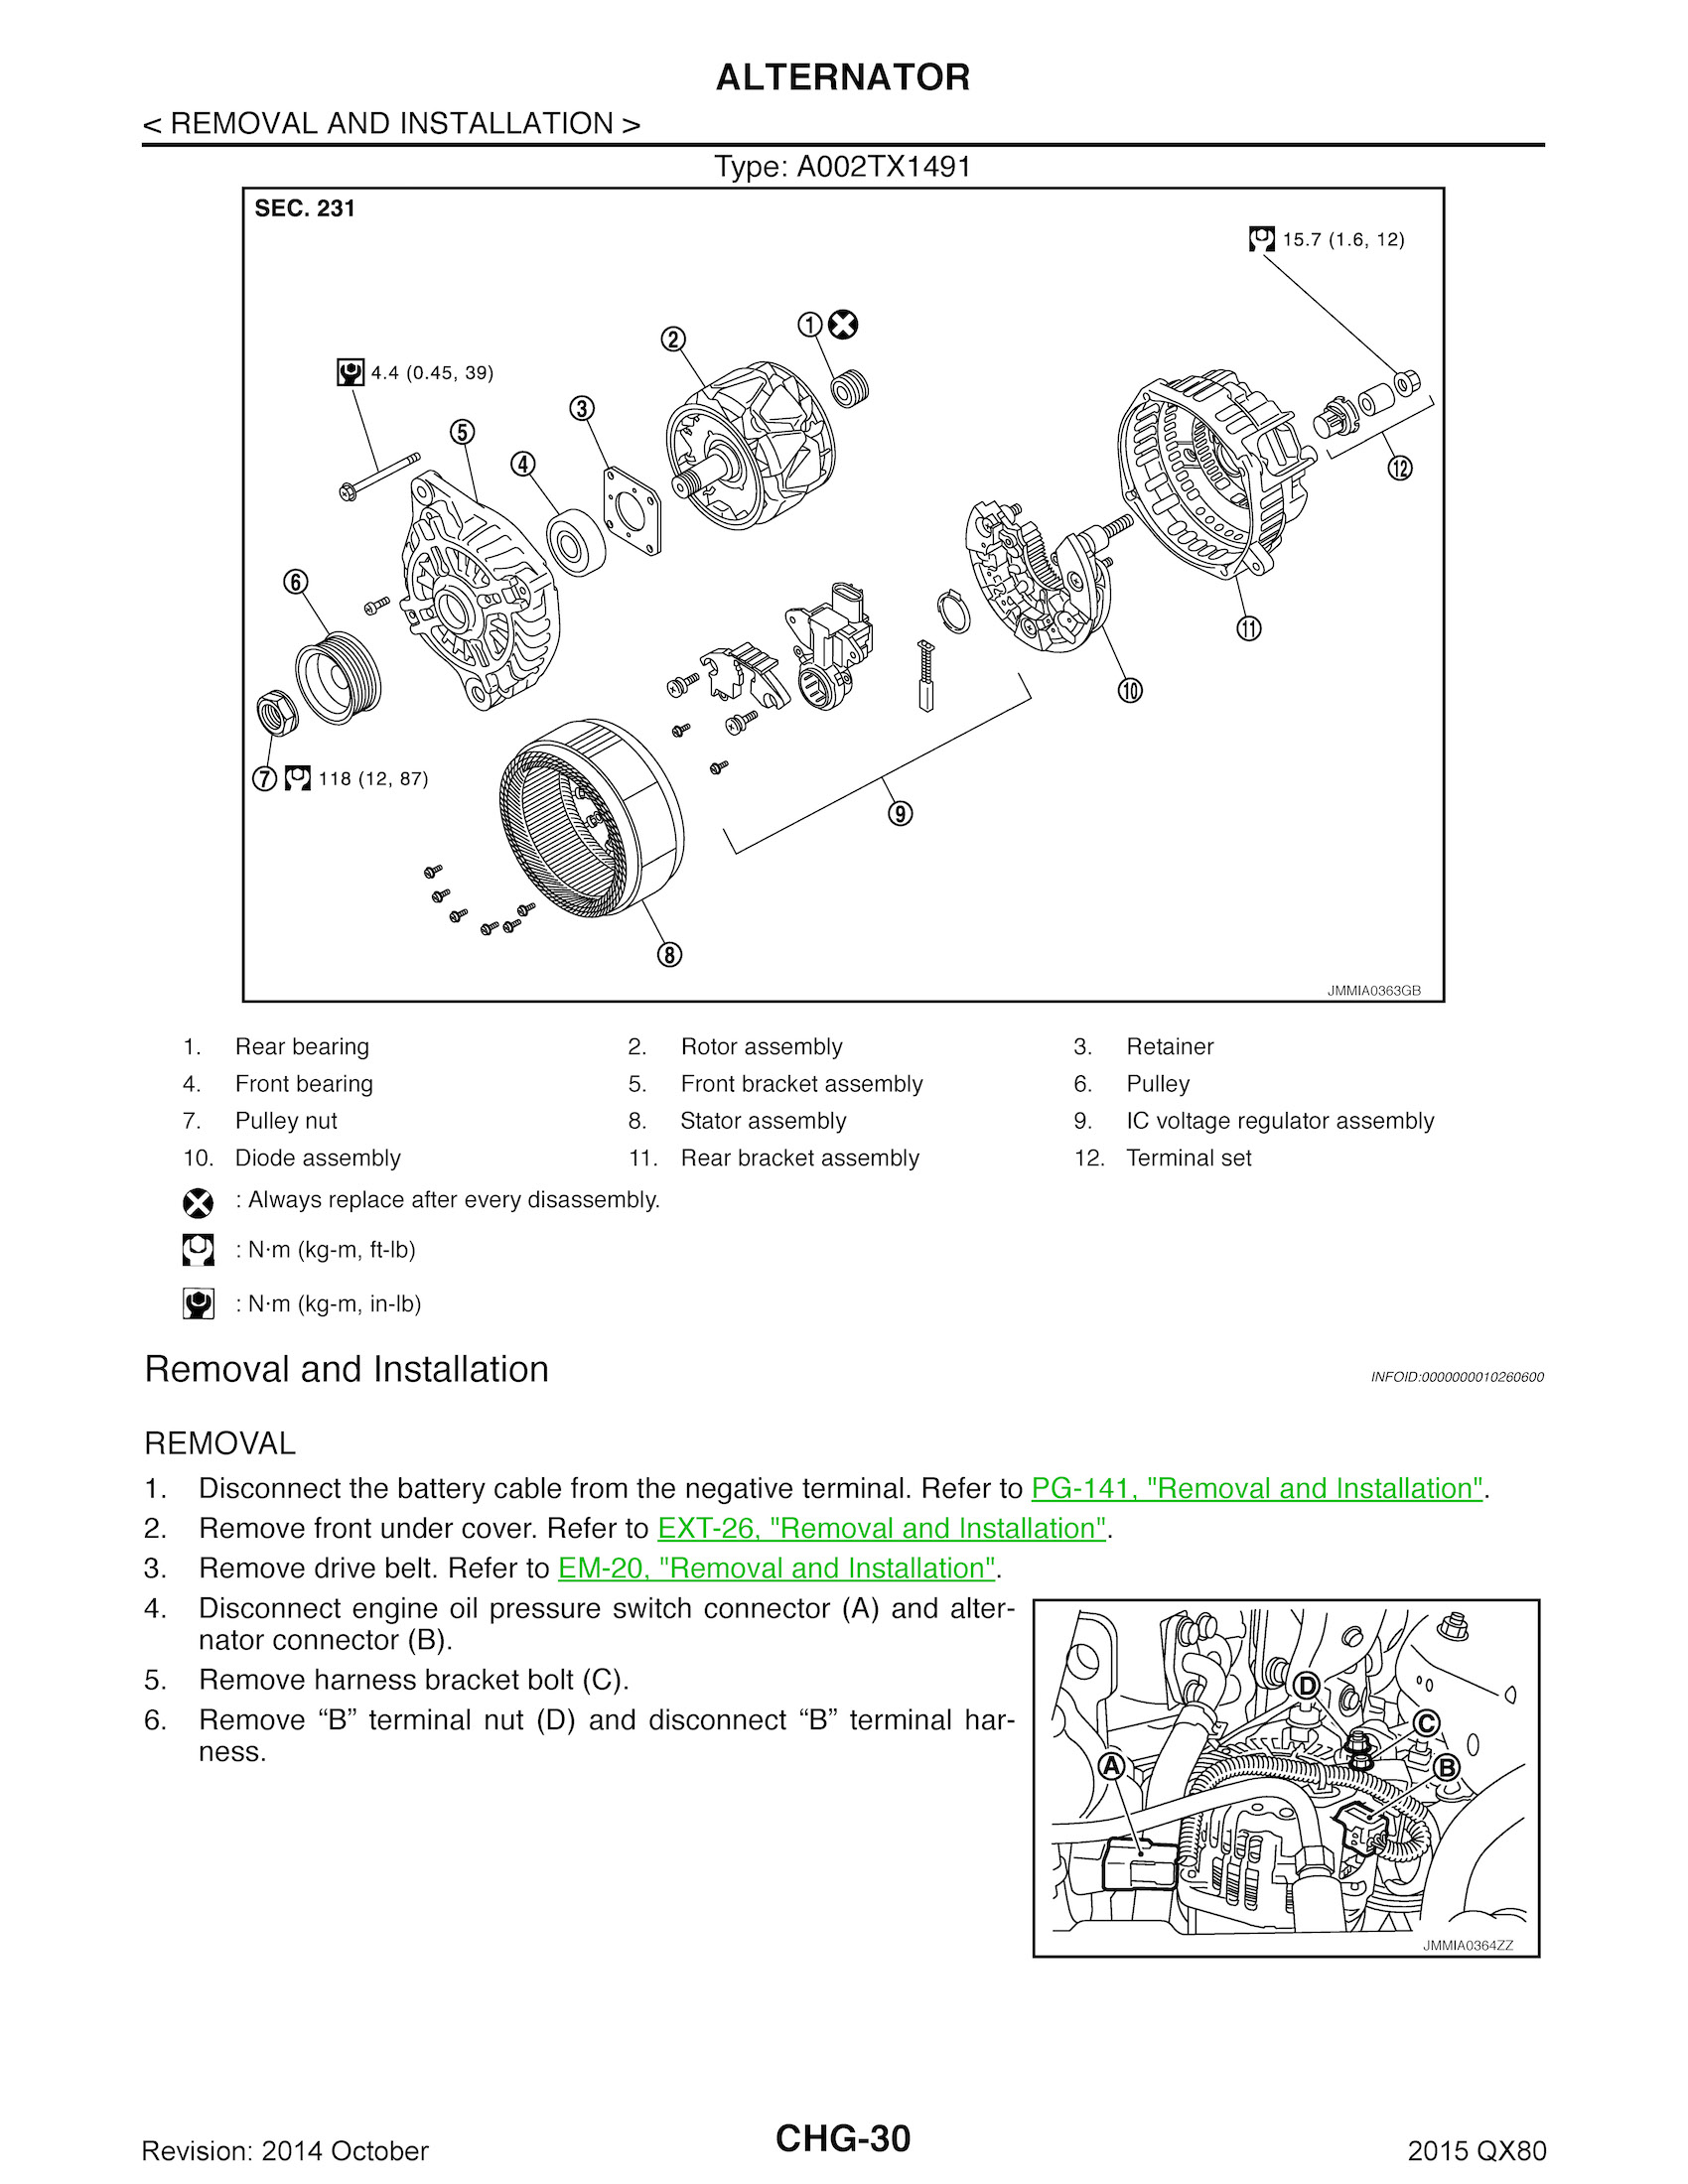 2015 Infiniti QX80 Repair Manual, alternator Removal and Installation